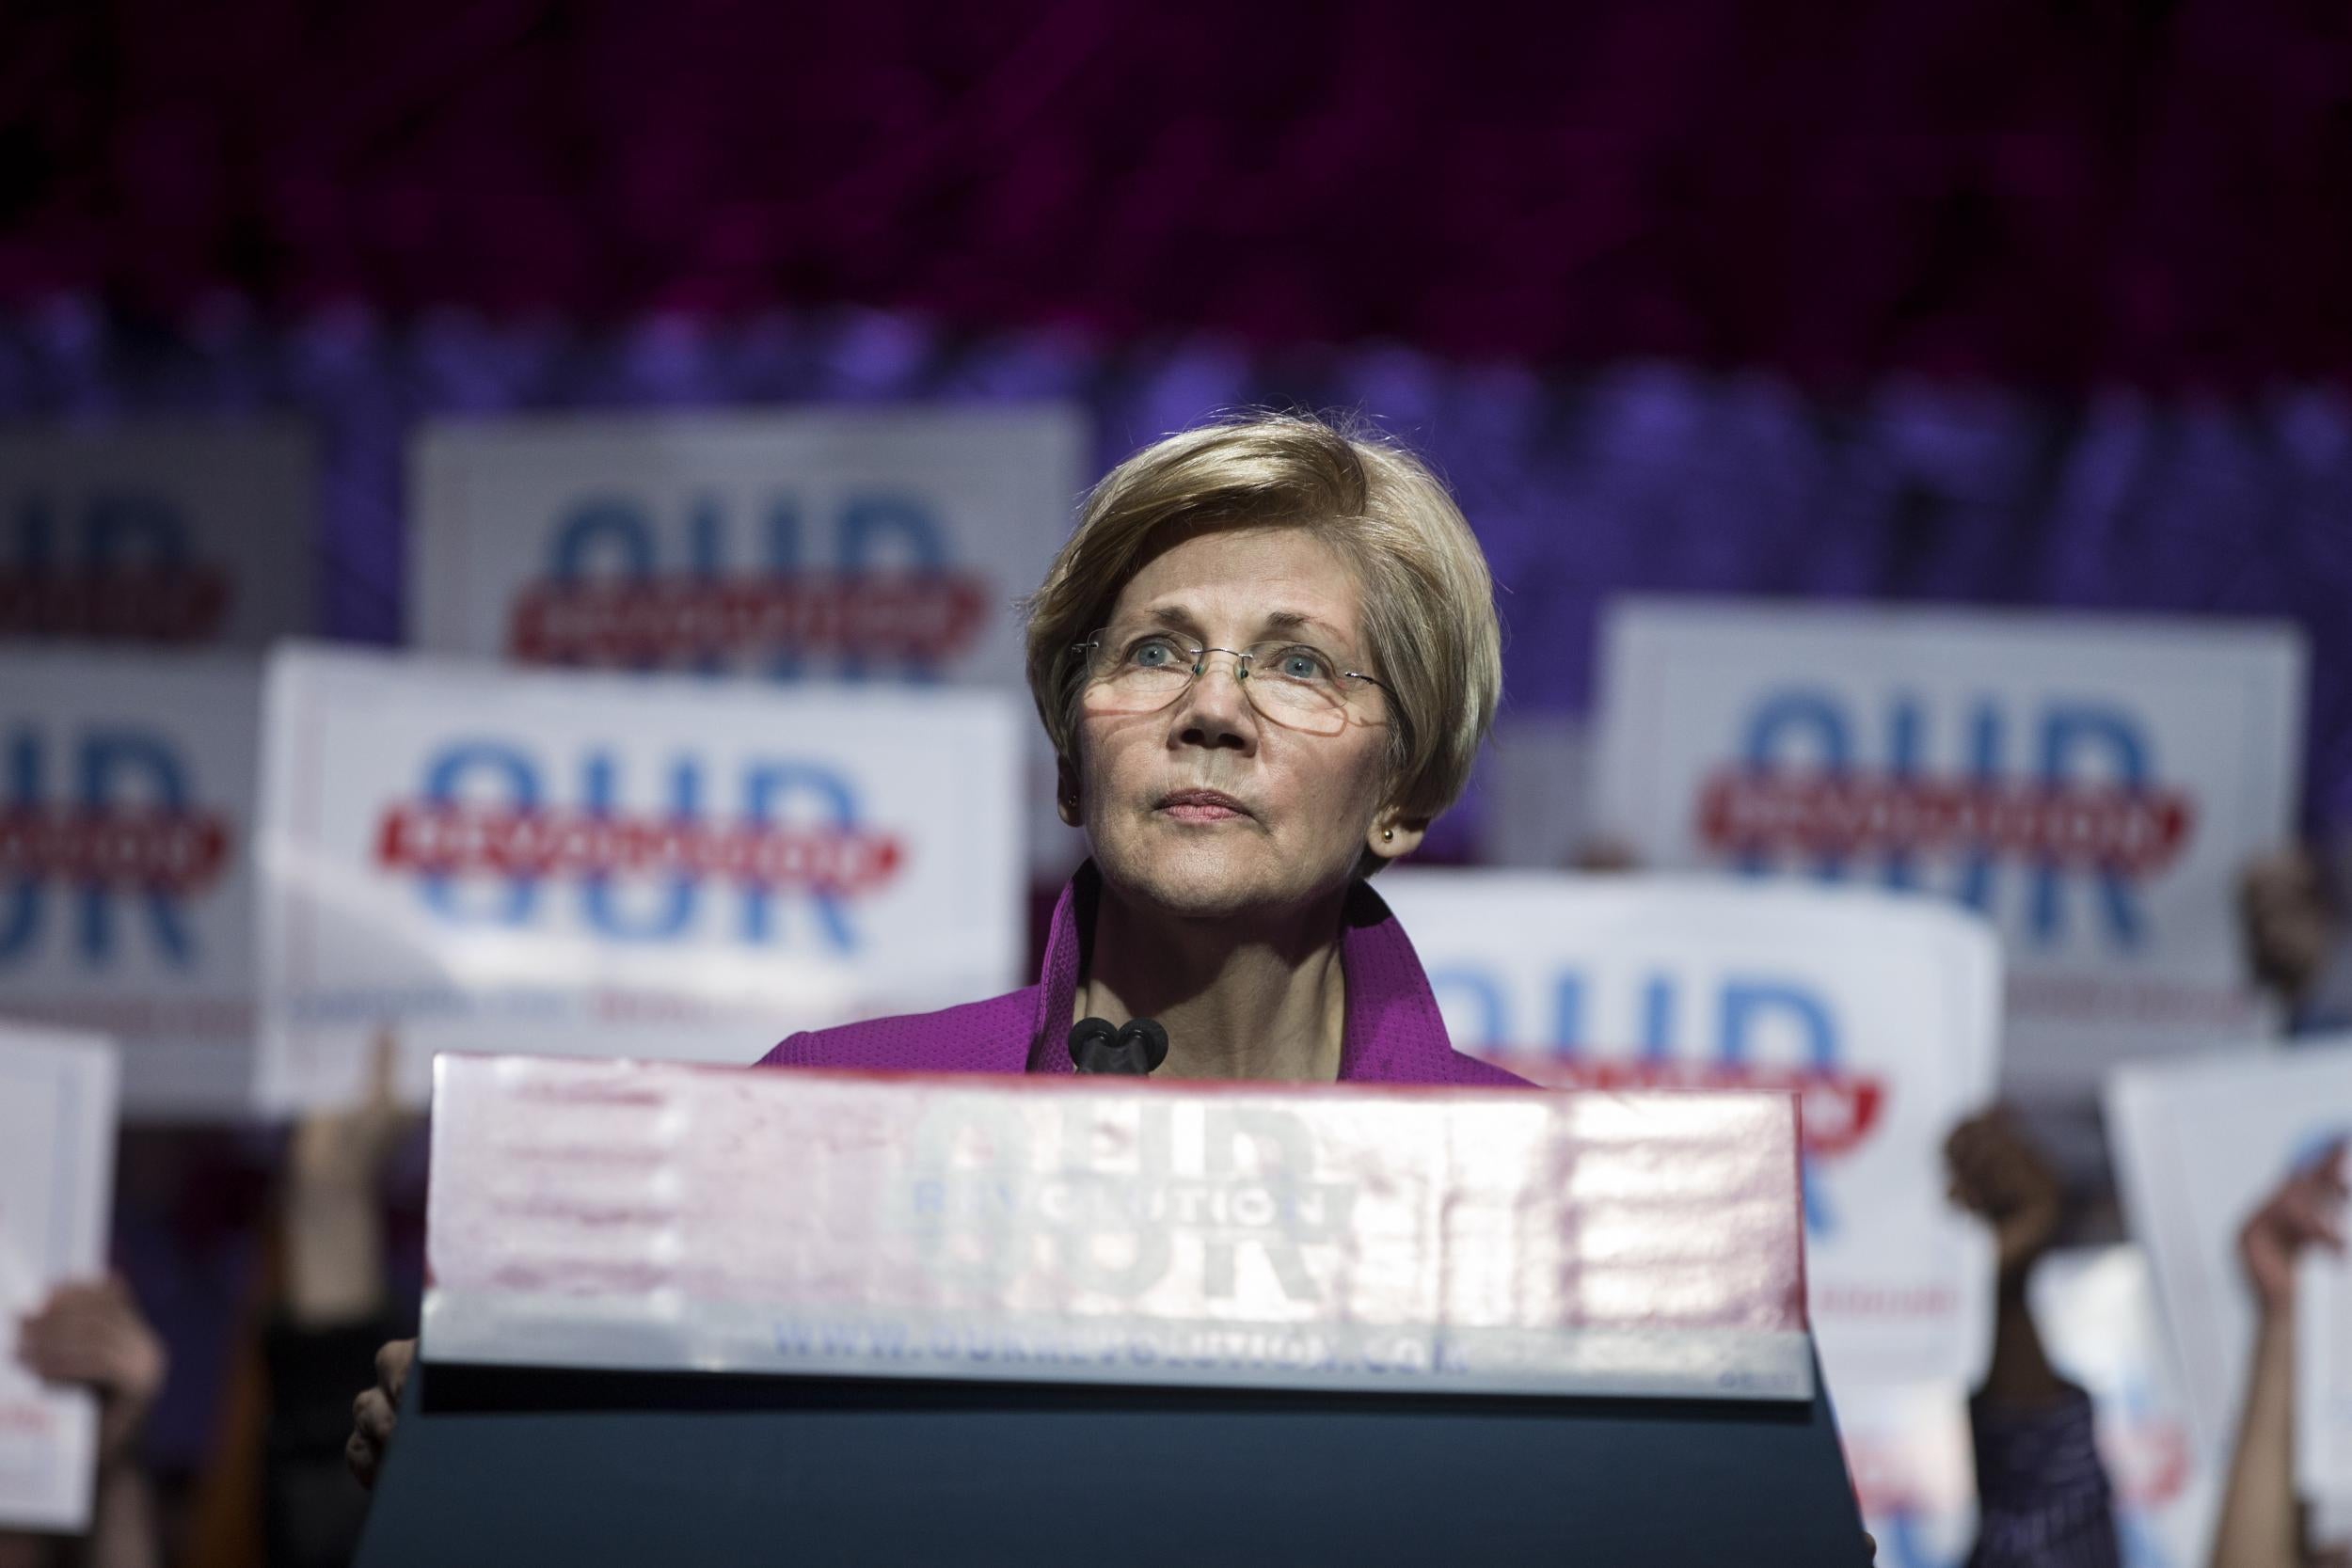 Senator Elizabeth Warren speaks at a recent political rally in Boston